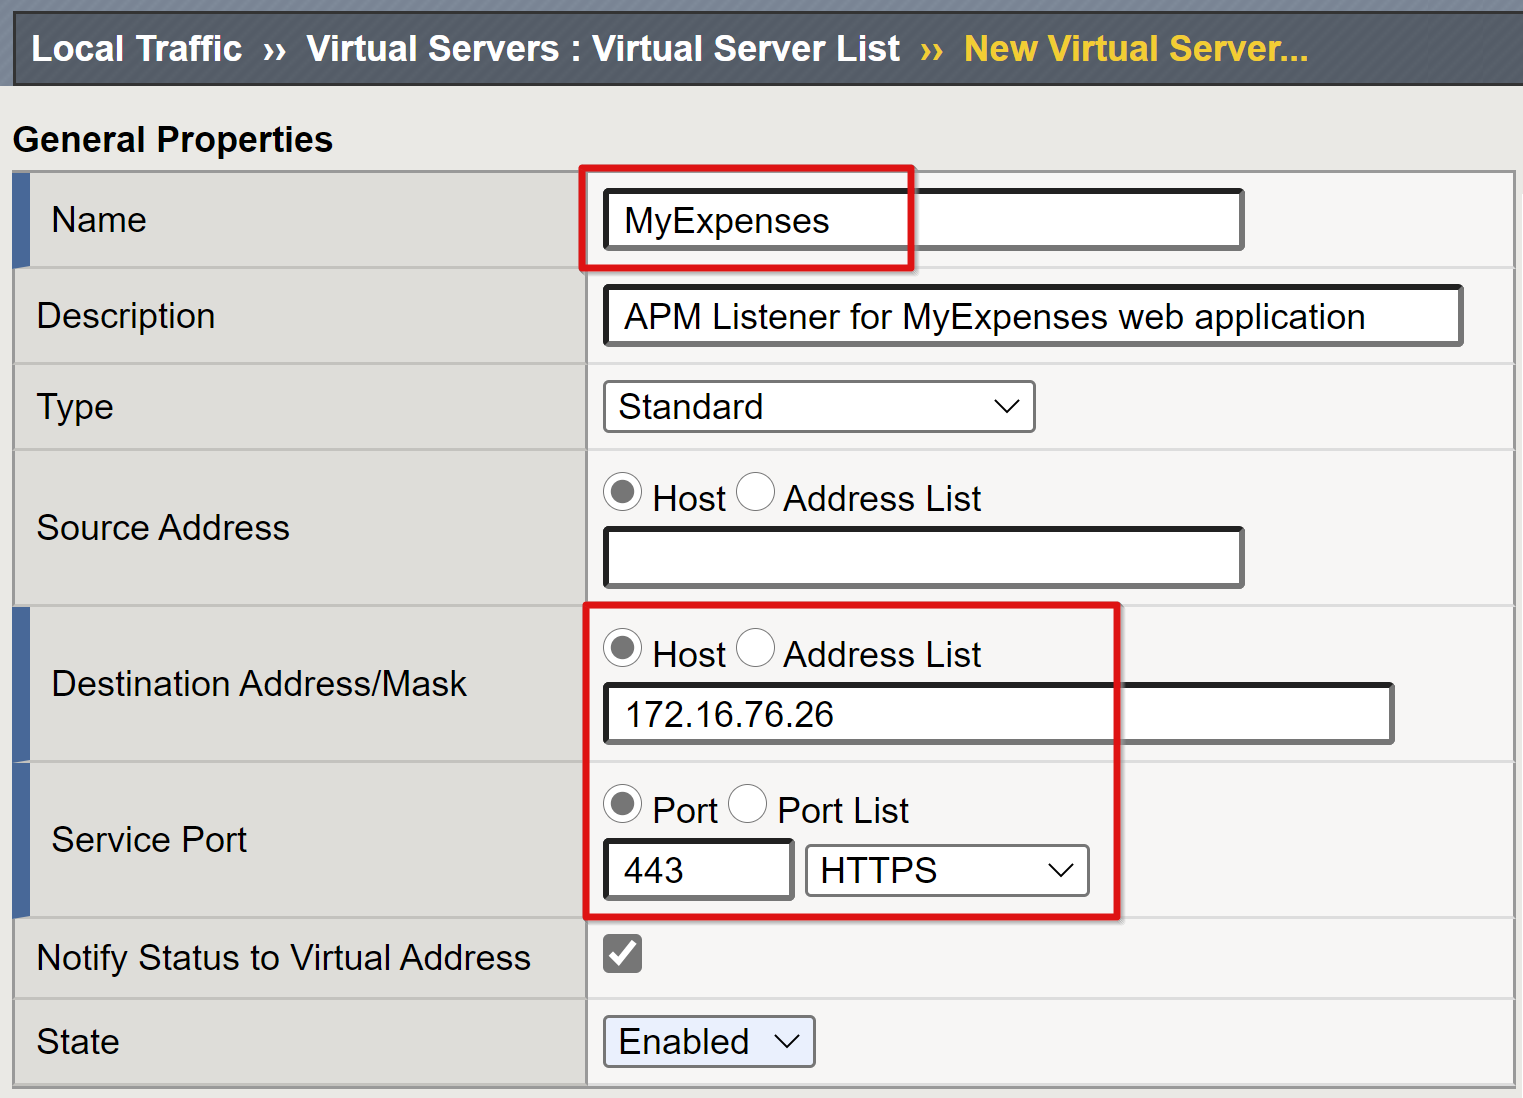 Screenshot of Name, Destination Address/Mask, and Service Port entries under General Properties.